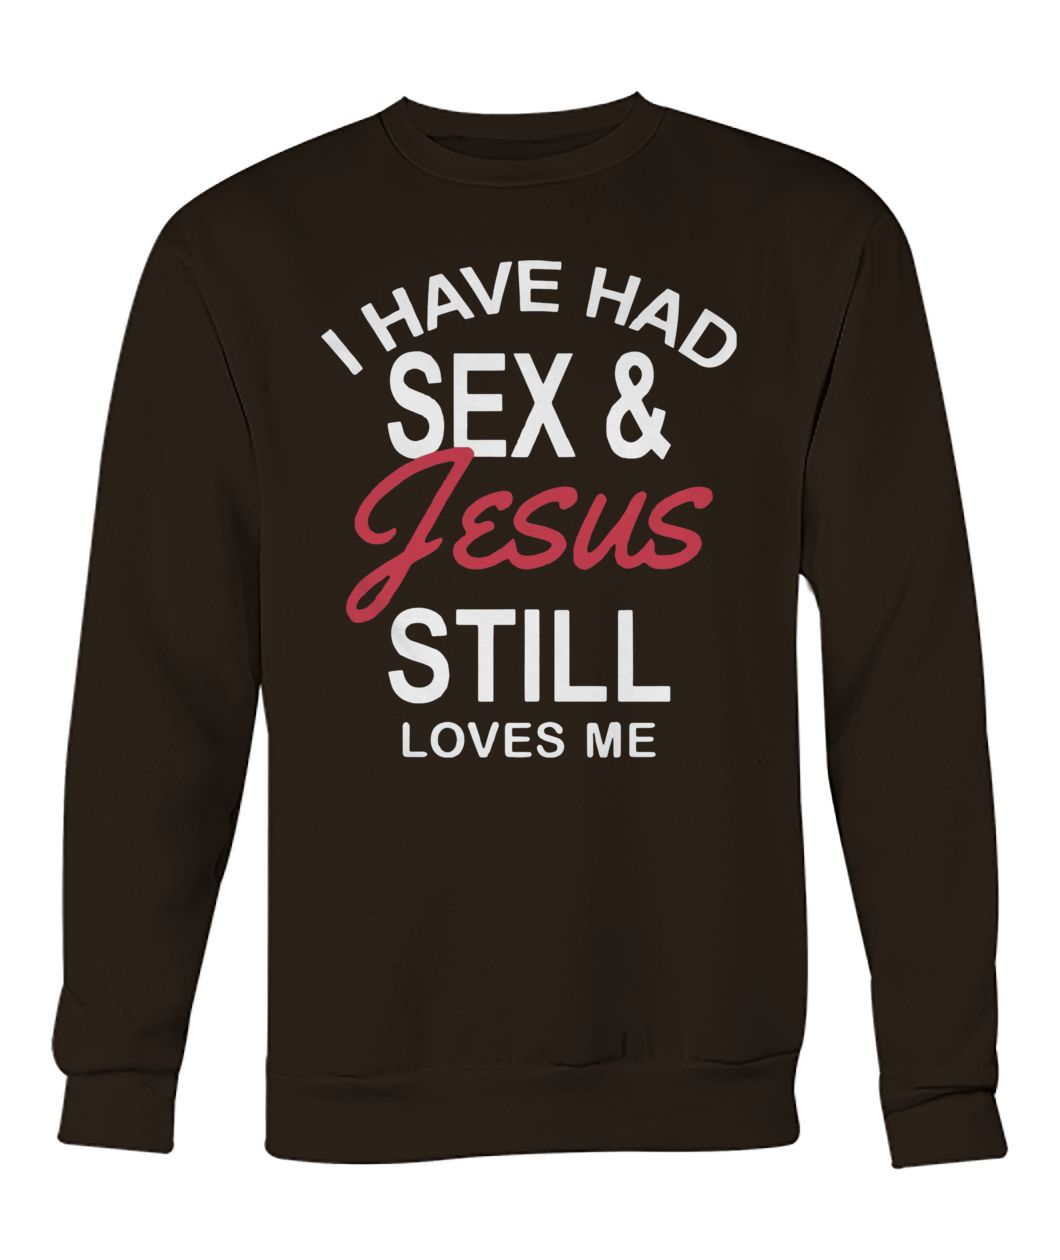 I have had sex and Jesus still loves me crew neck sweatshirt